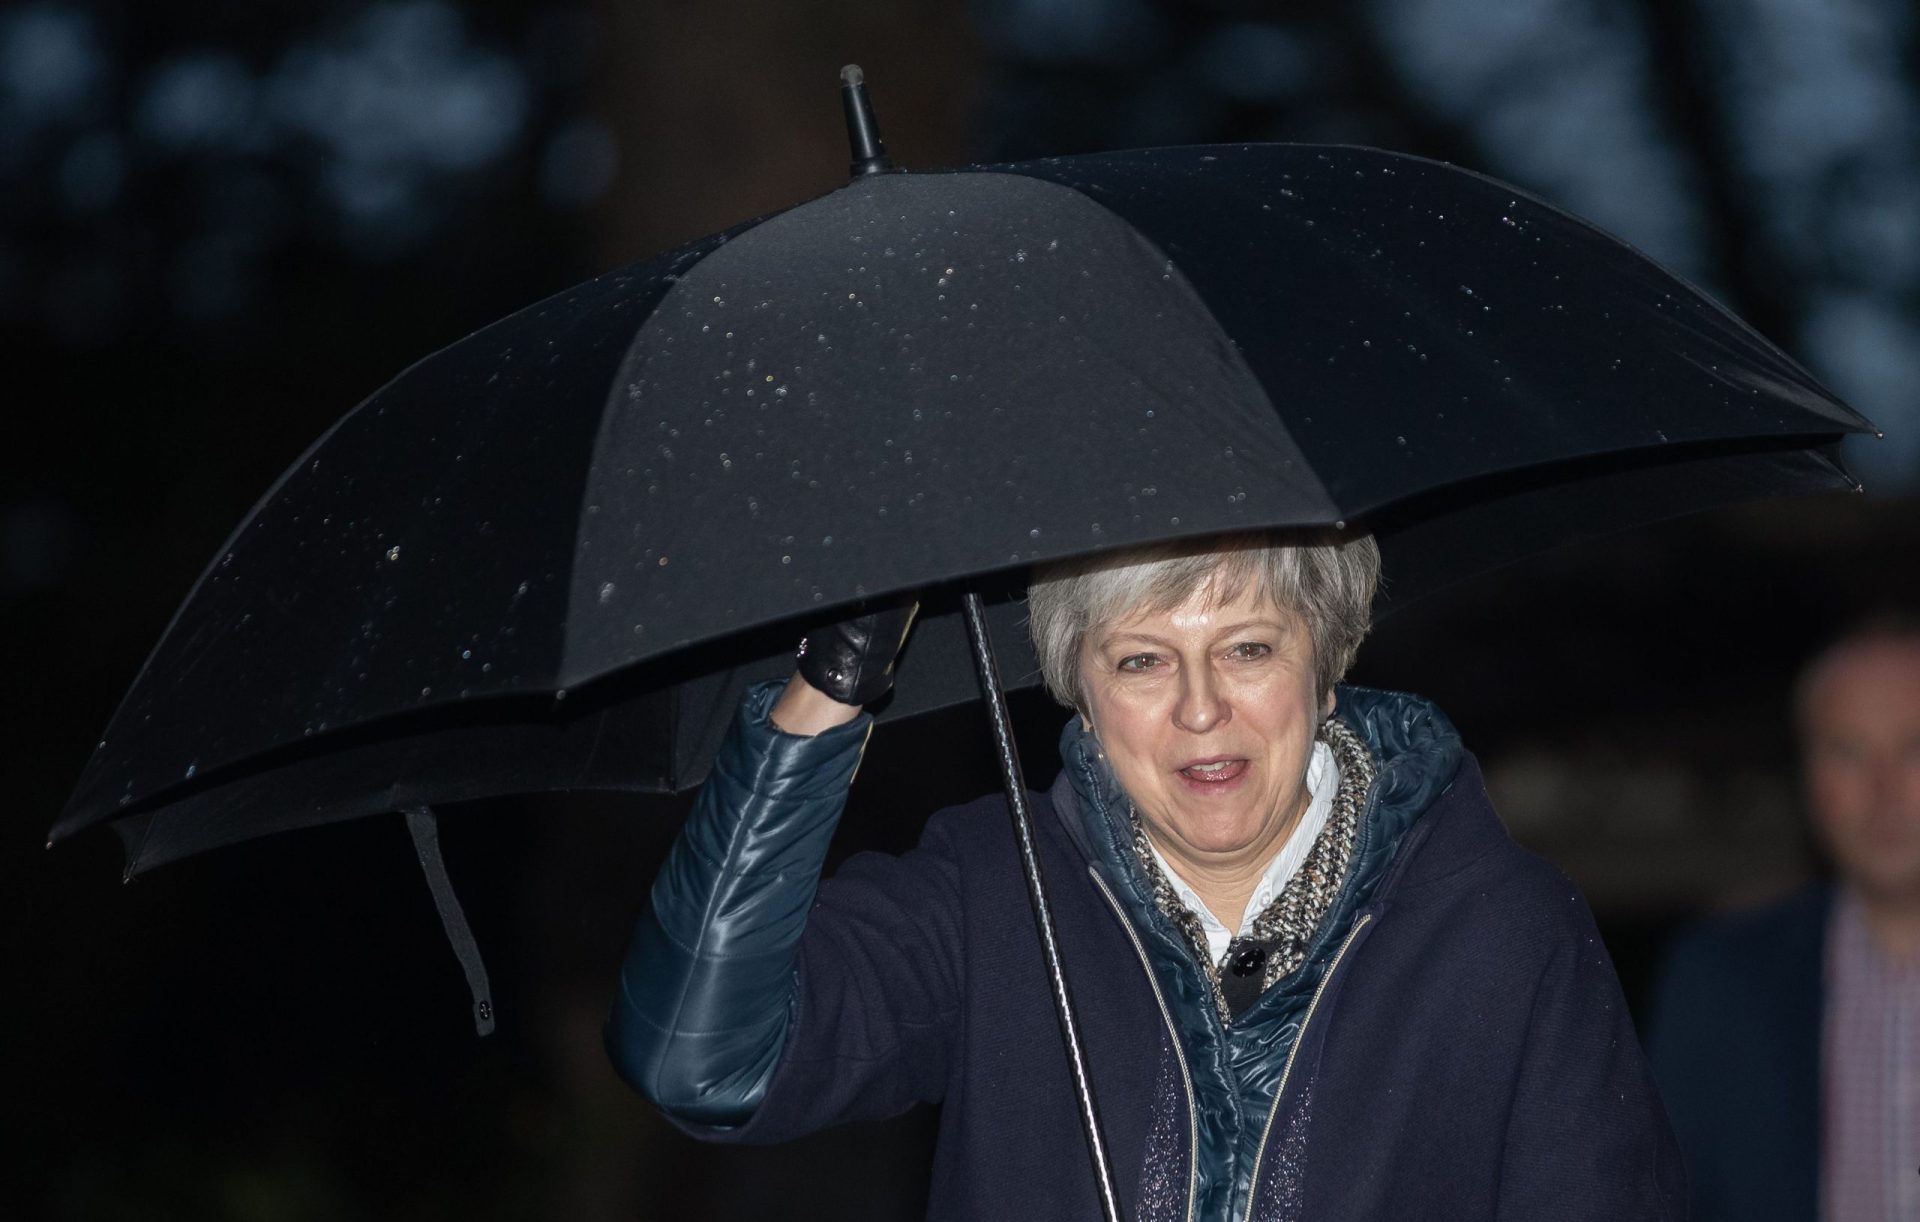 Theresa May pondera adiar a votação do acordo do Brexit